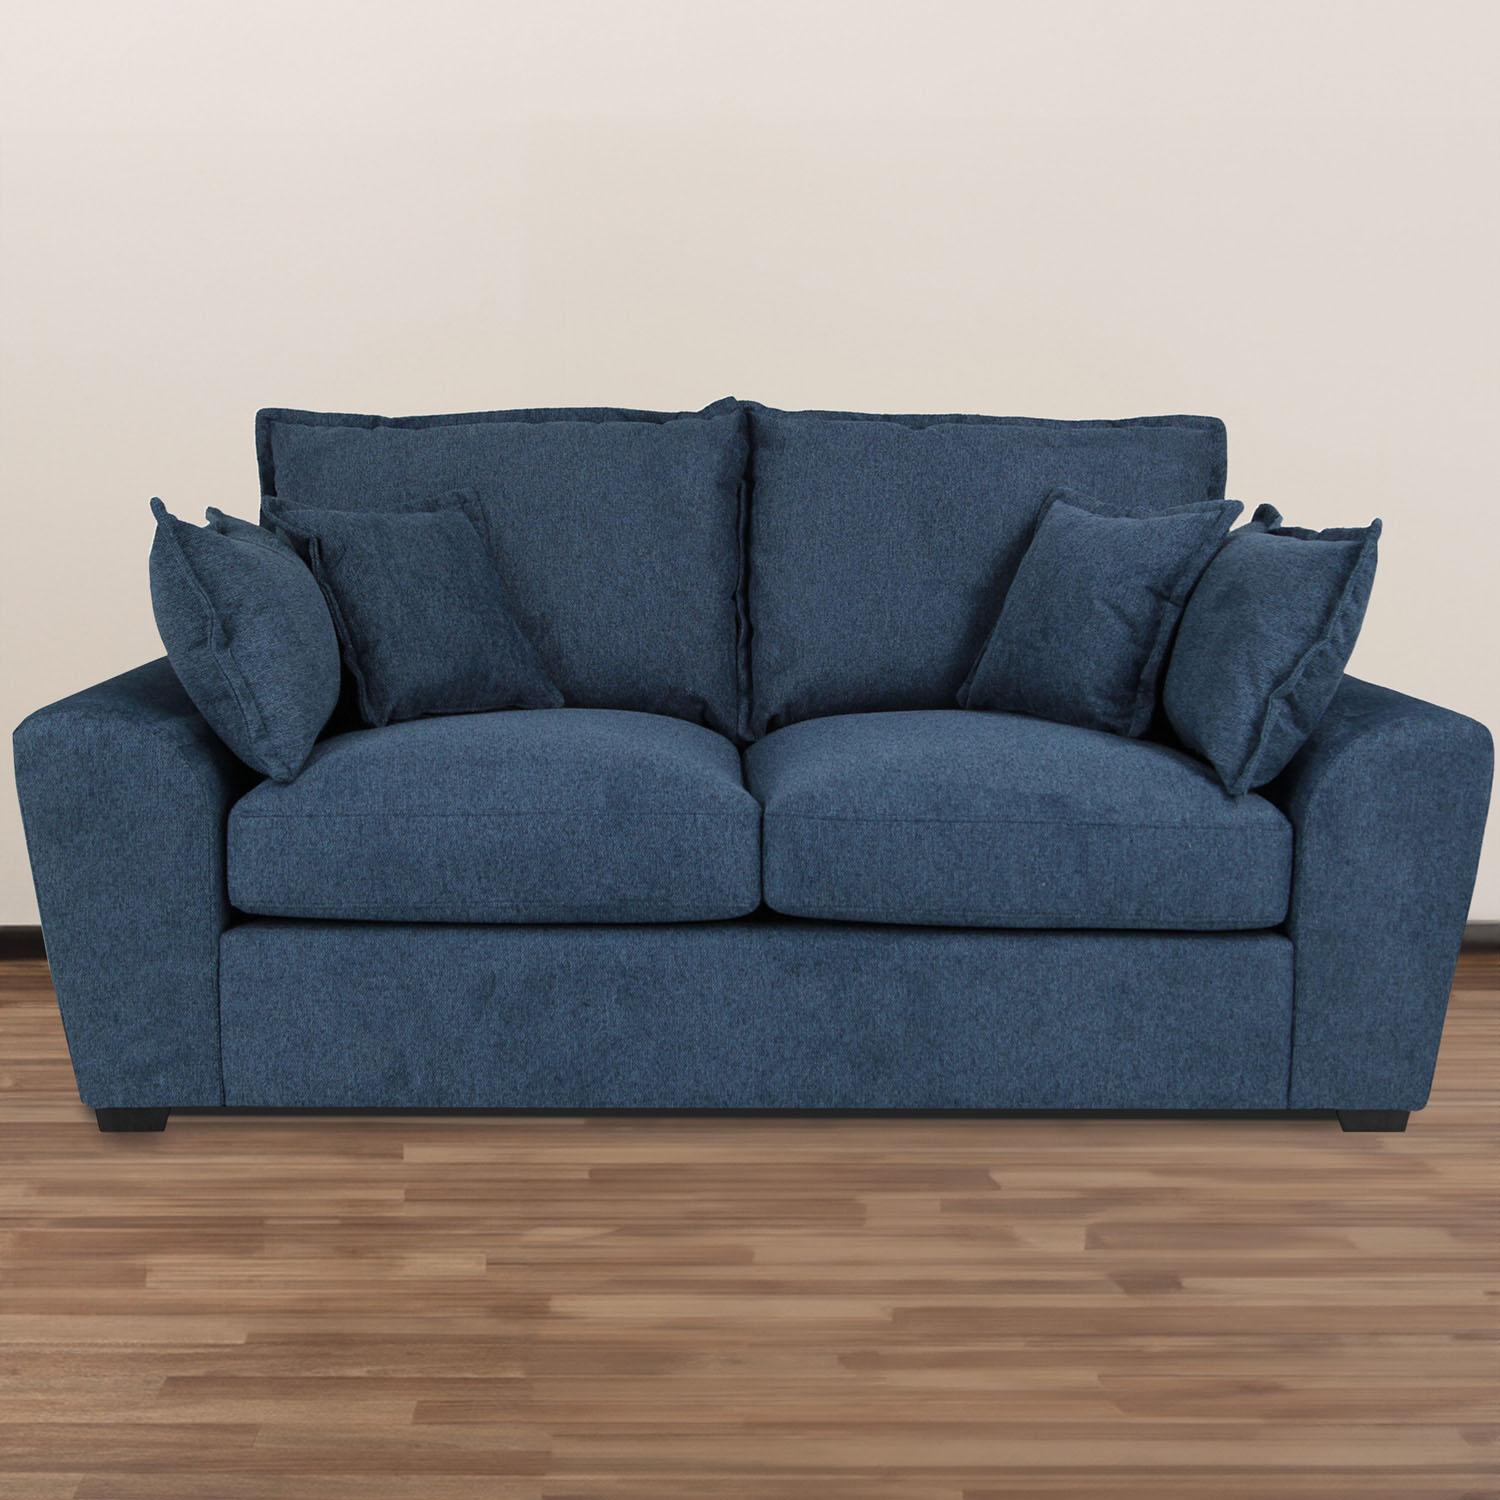 Ryder 3 Seater Blue Fabric Sofa Image 1